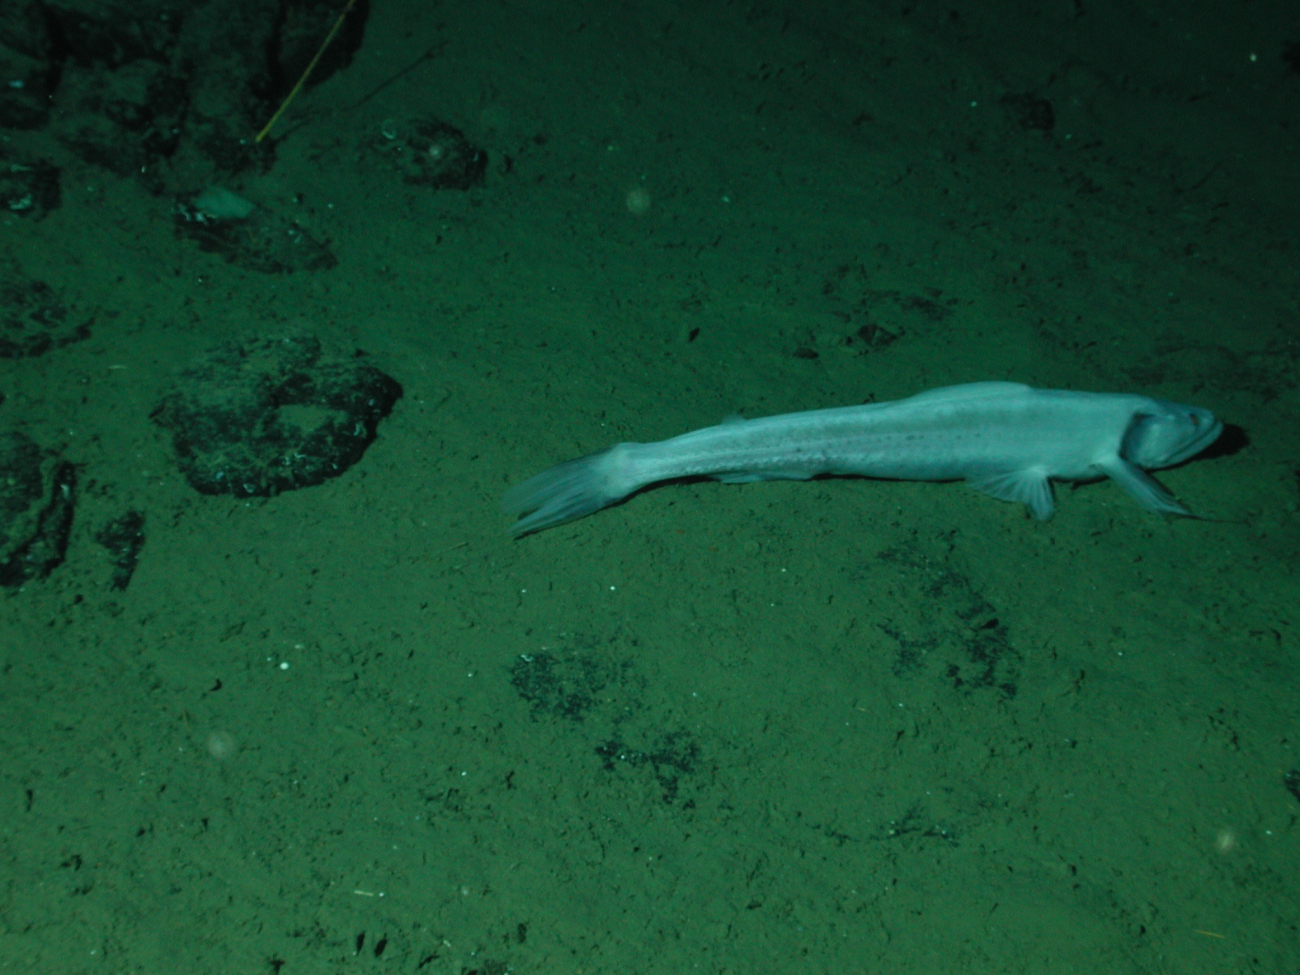 Bathysaur or highfin lizardfish (Bathysaurus mollis) at 2375 meters depth